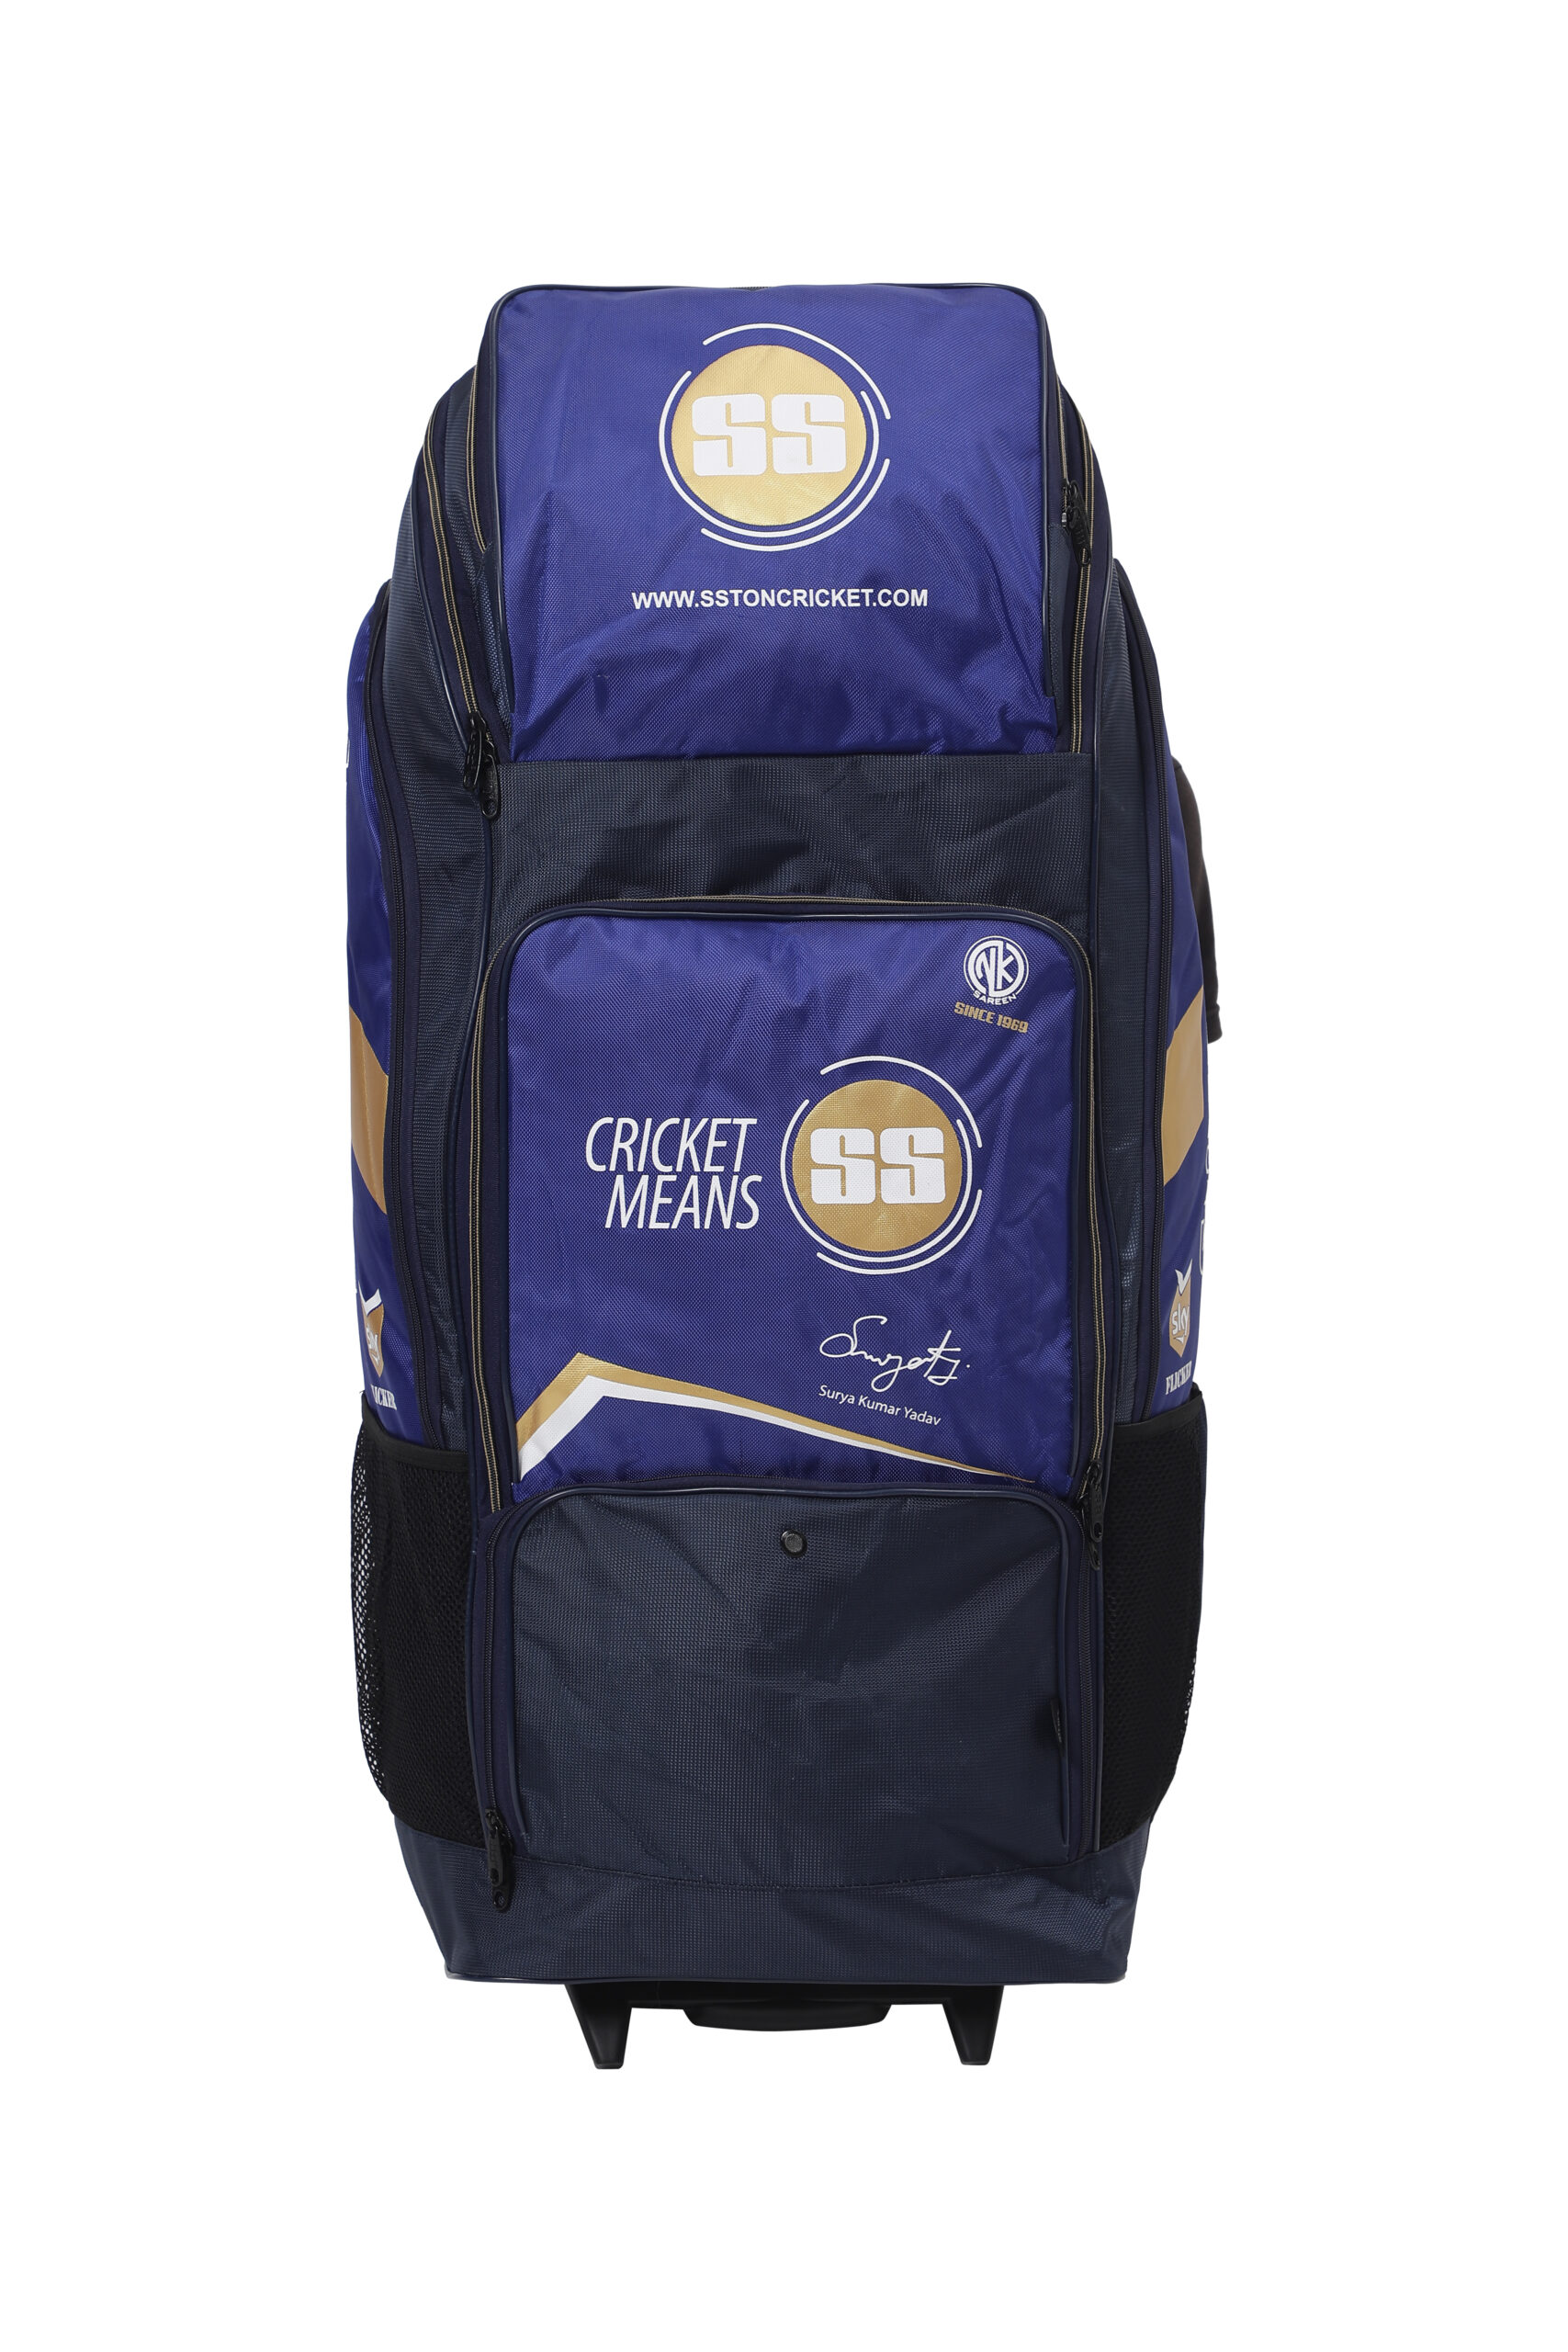 SS Matrix Cricket Kit Bag (wheel) | KIBI Sports – KIBI SPORTS